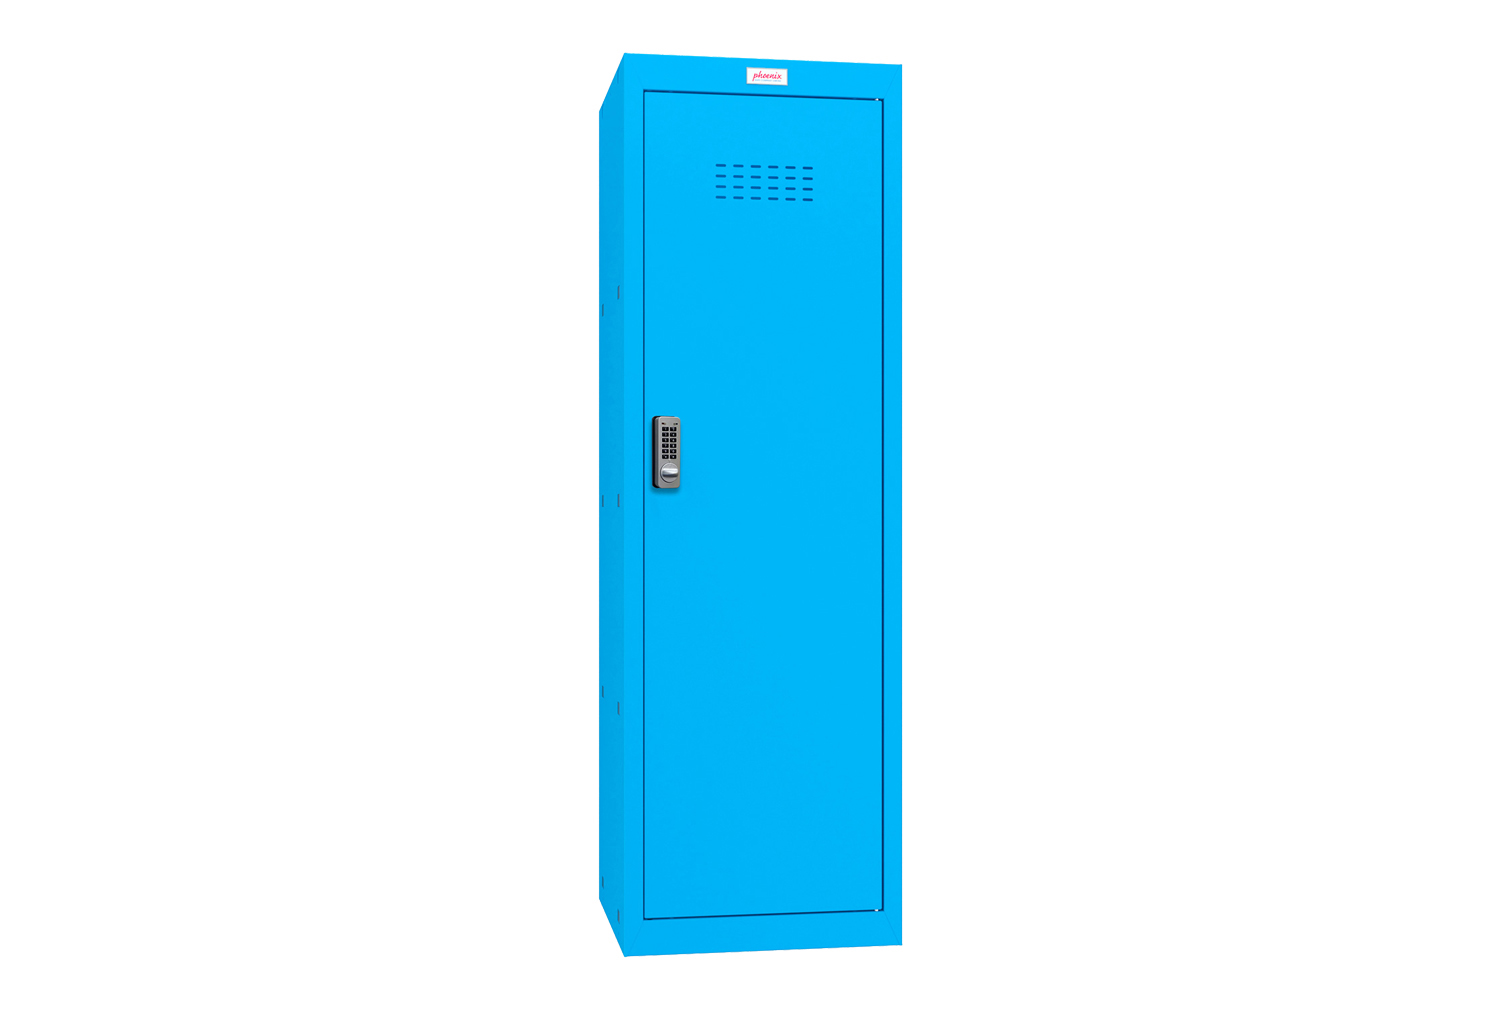 Phoenix CL Series Cube Lockers, 3 Shelf - 40wx40dx127h (cm), Electric Lock, Blue, Express Delivery